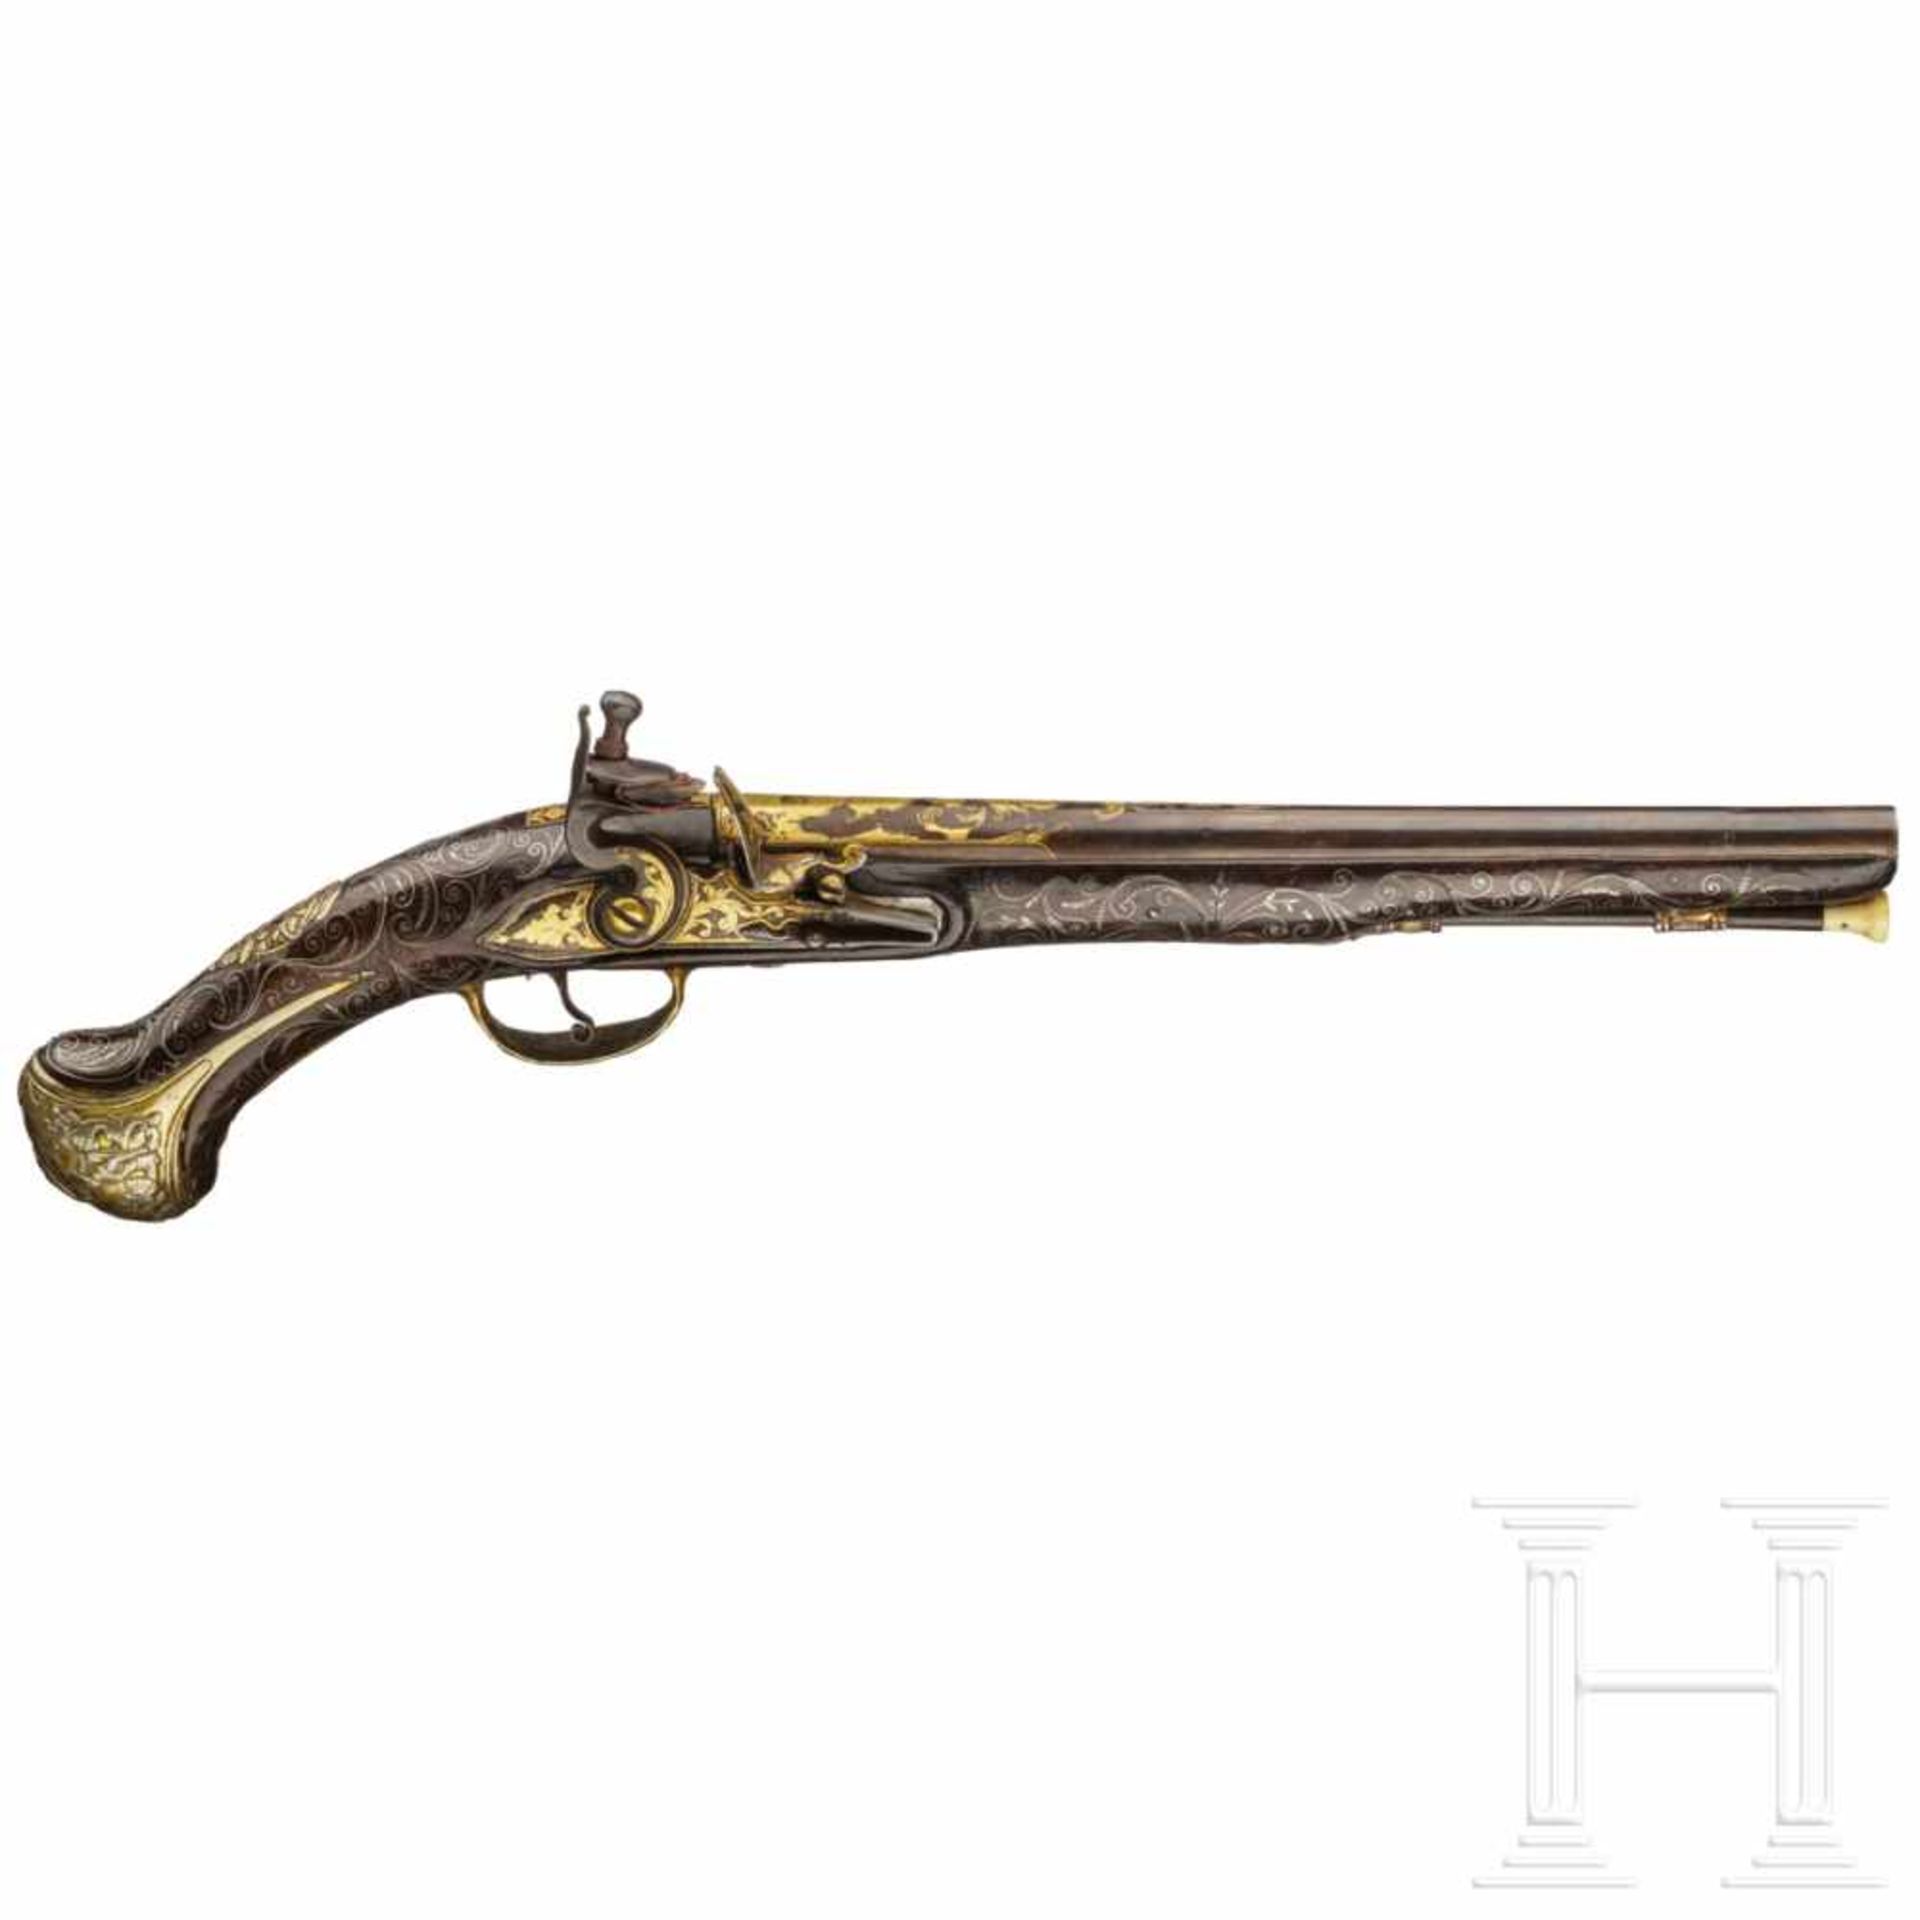 An Ottoman gold-damascened flintlock pistol (Kubur), circa 1800Octagonal to round barrel with smooth